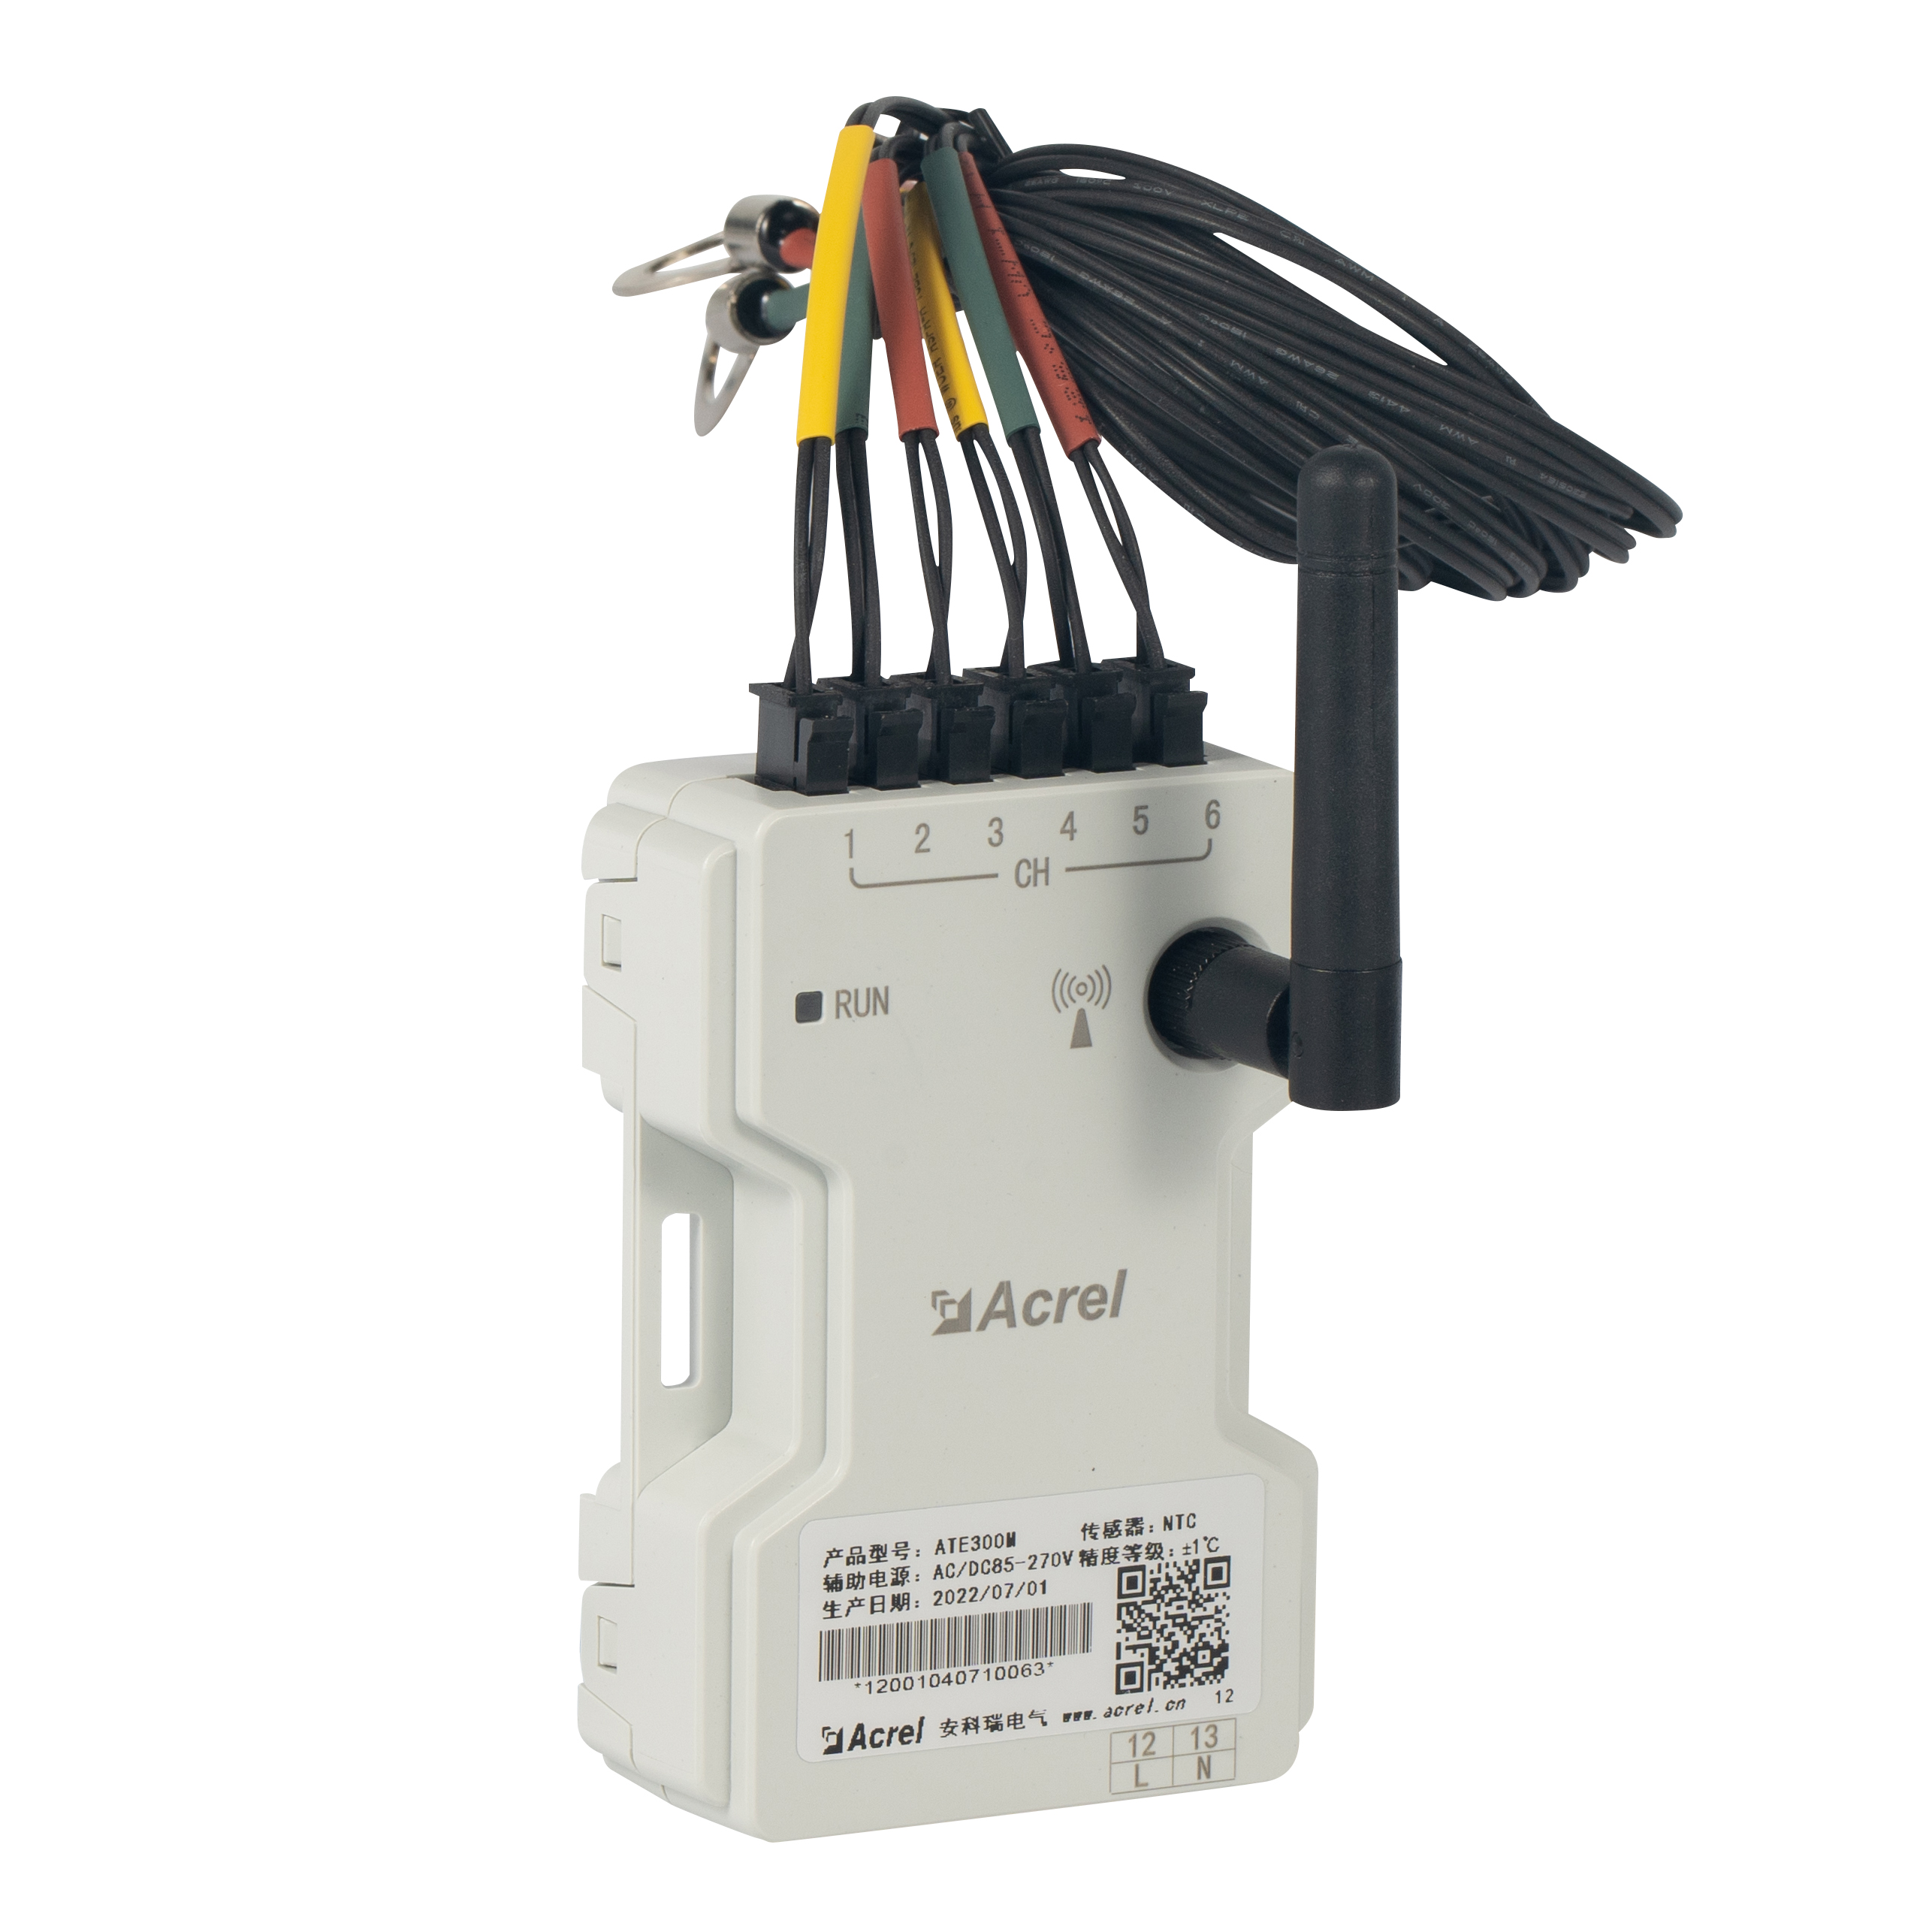 Acrel ATE300 Wireless Temperature Monitoring Sensor for Cable/Busbar Temperature Monitoring Featured Image